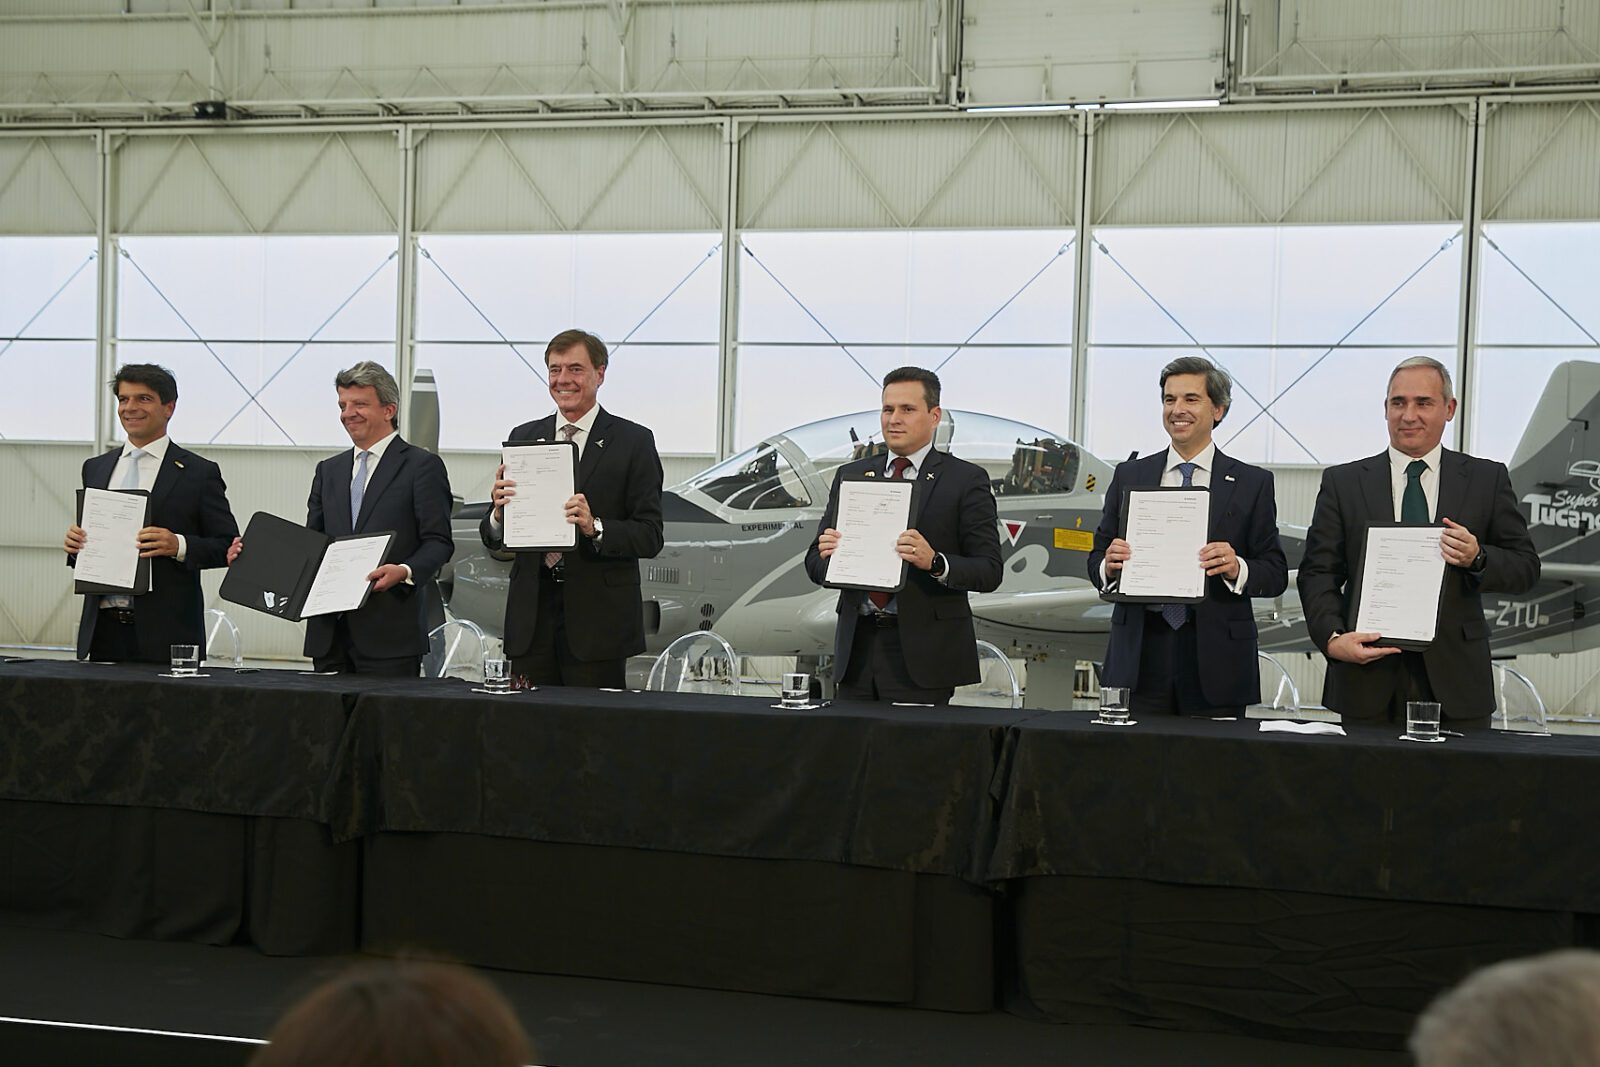 Embraer signs Memorandum of Understanding with Portuguese Defense Industry